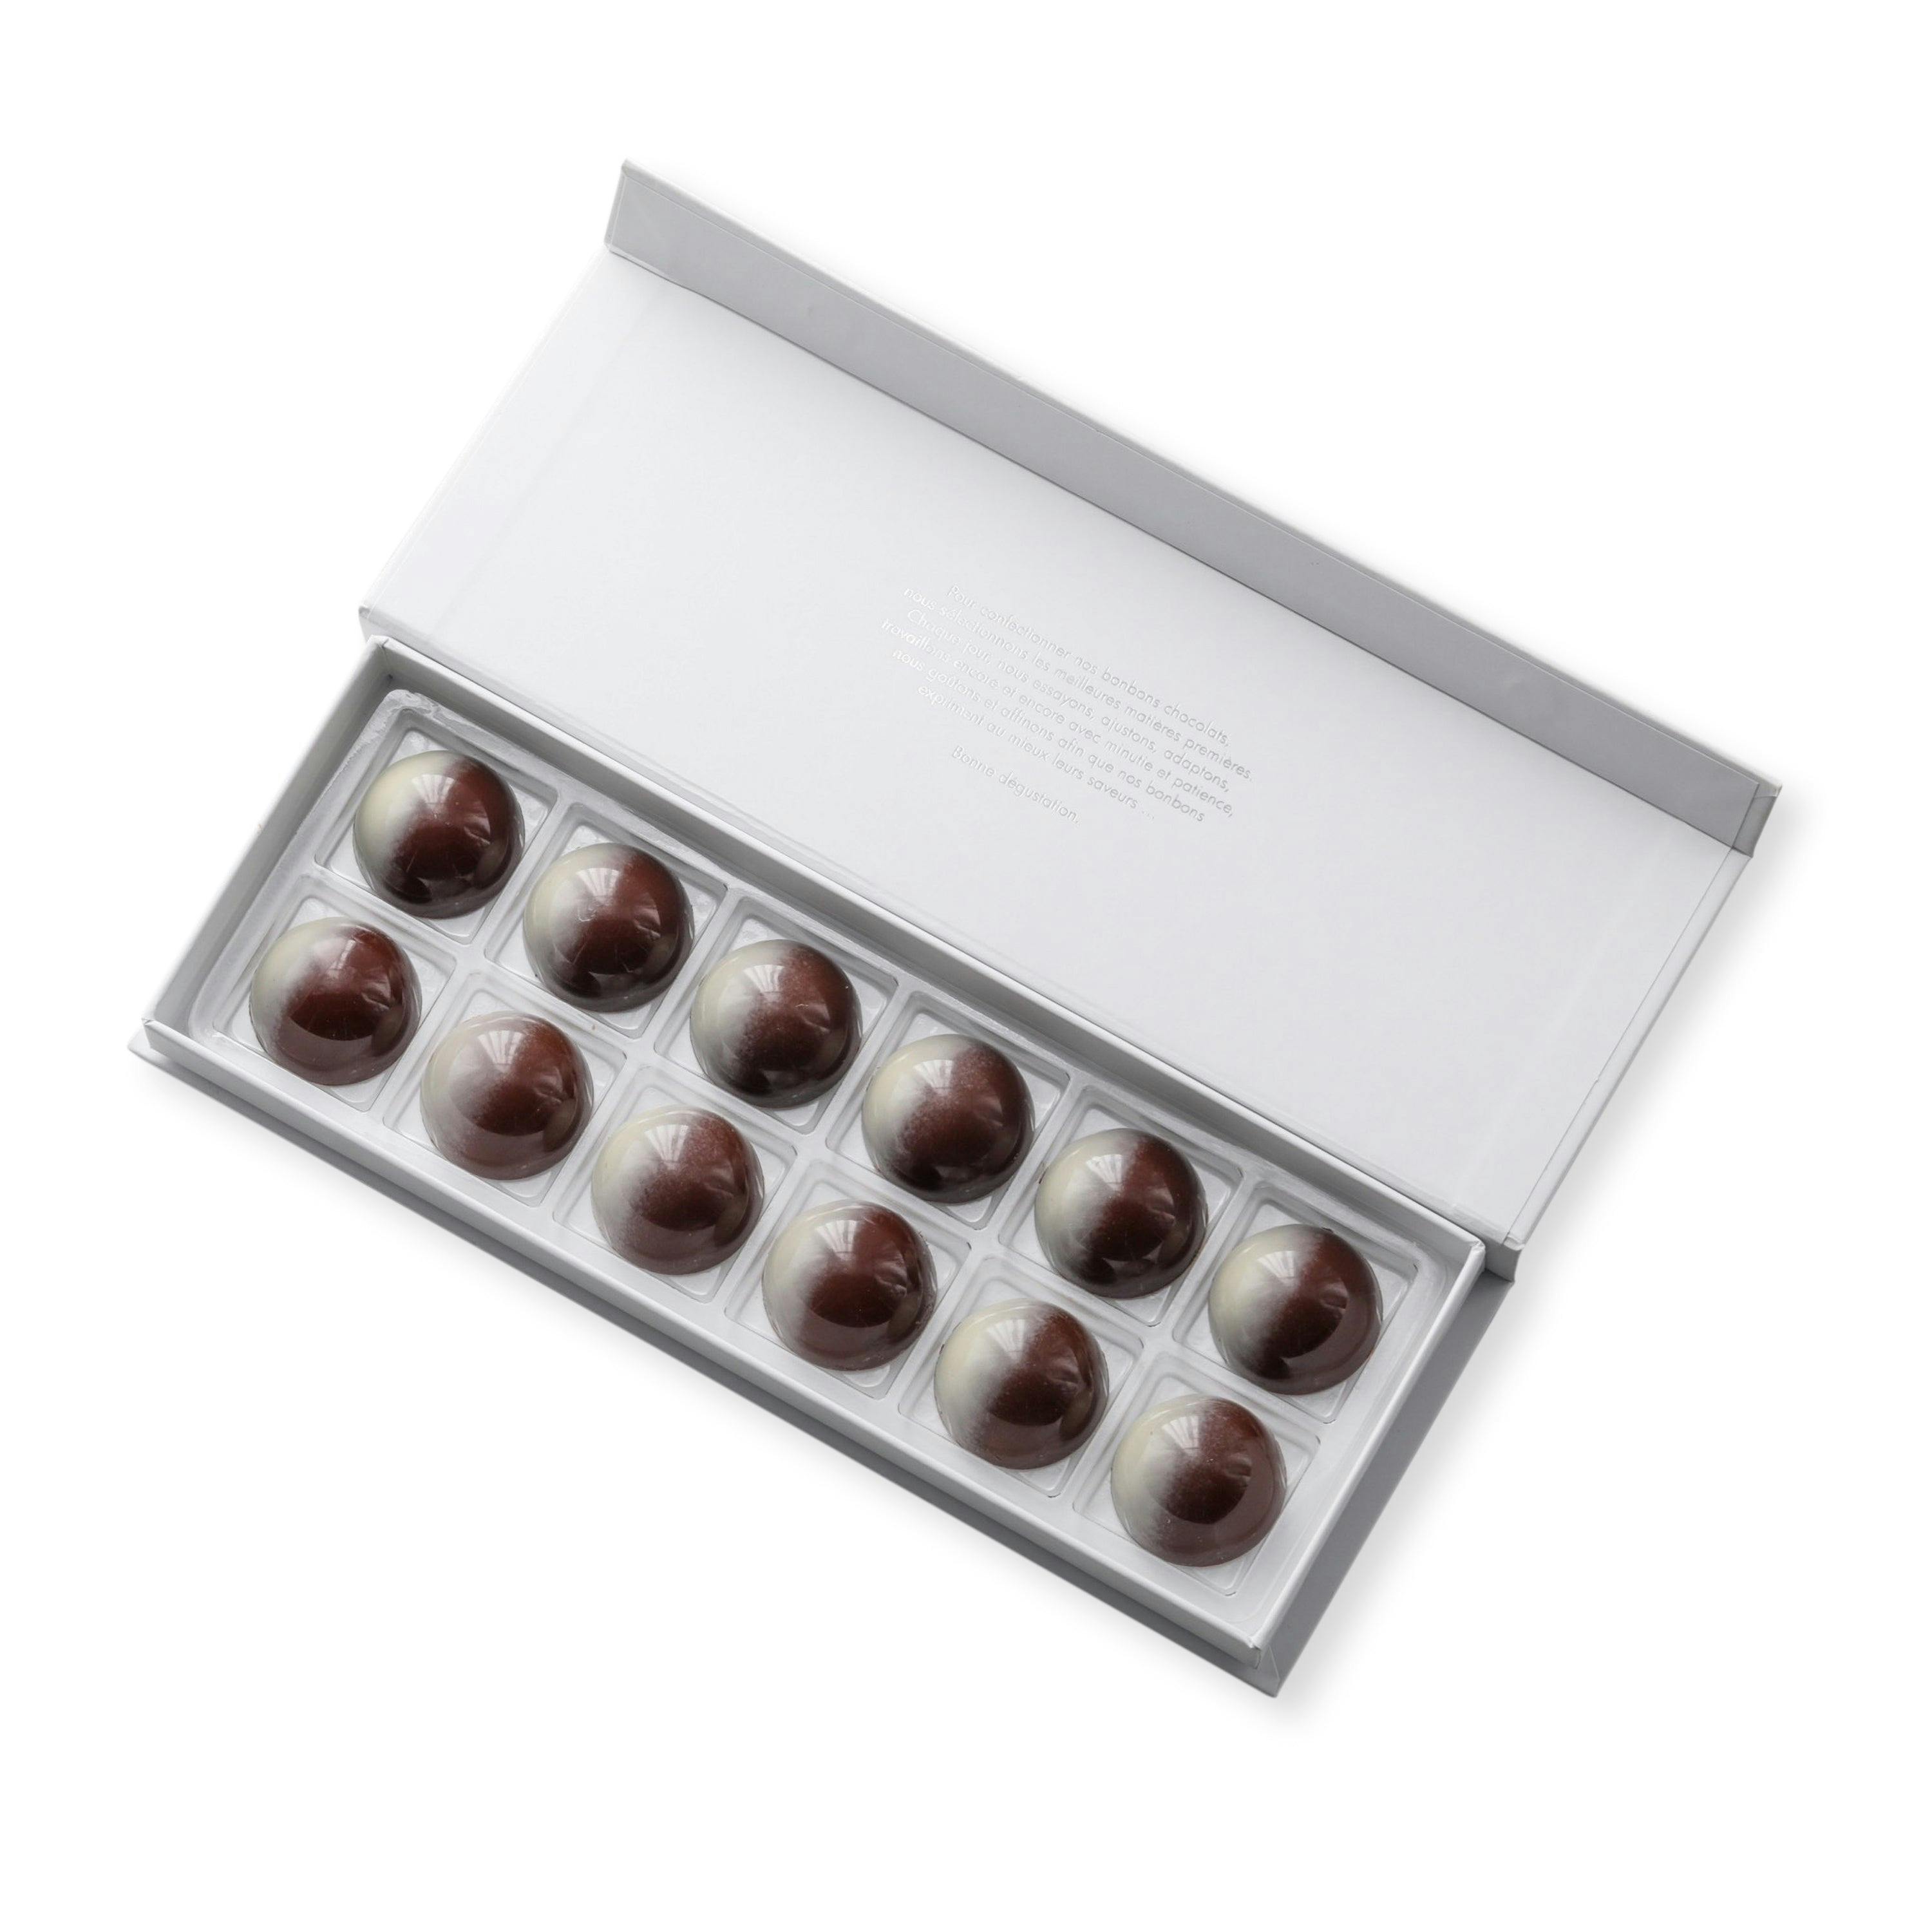 Coffret Saline 12 chocolats - Vincent Vallée world champion chocolatier